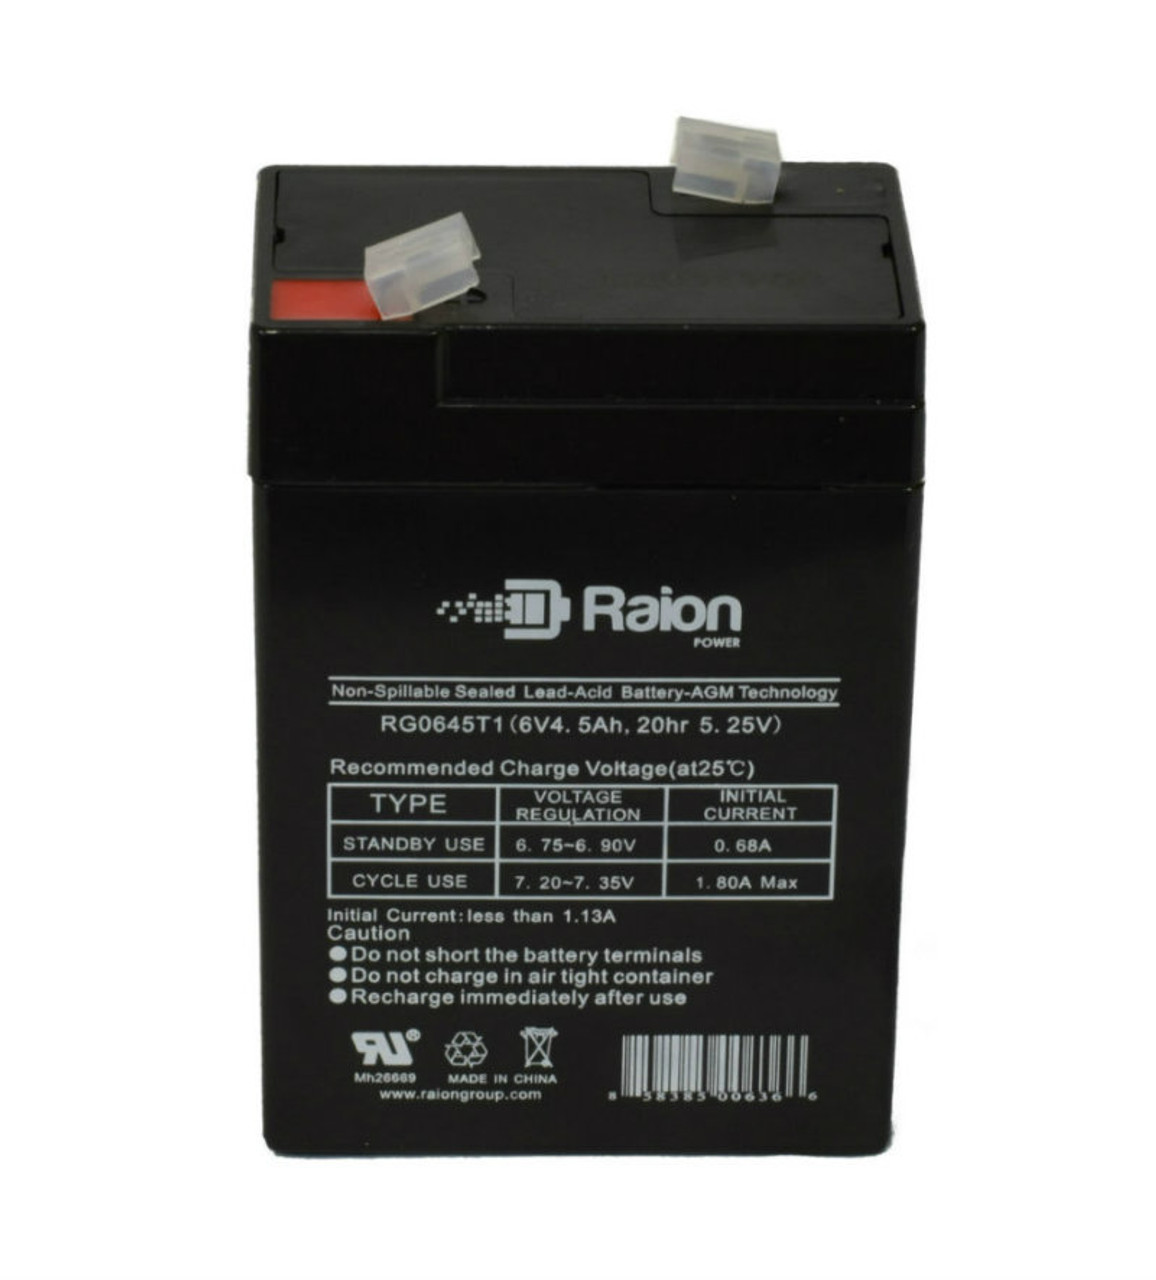 Raion Power RG0645T1 Replacement Battery Cartridge for Vasworld Power GB6-4